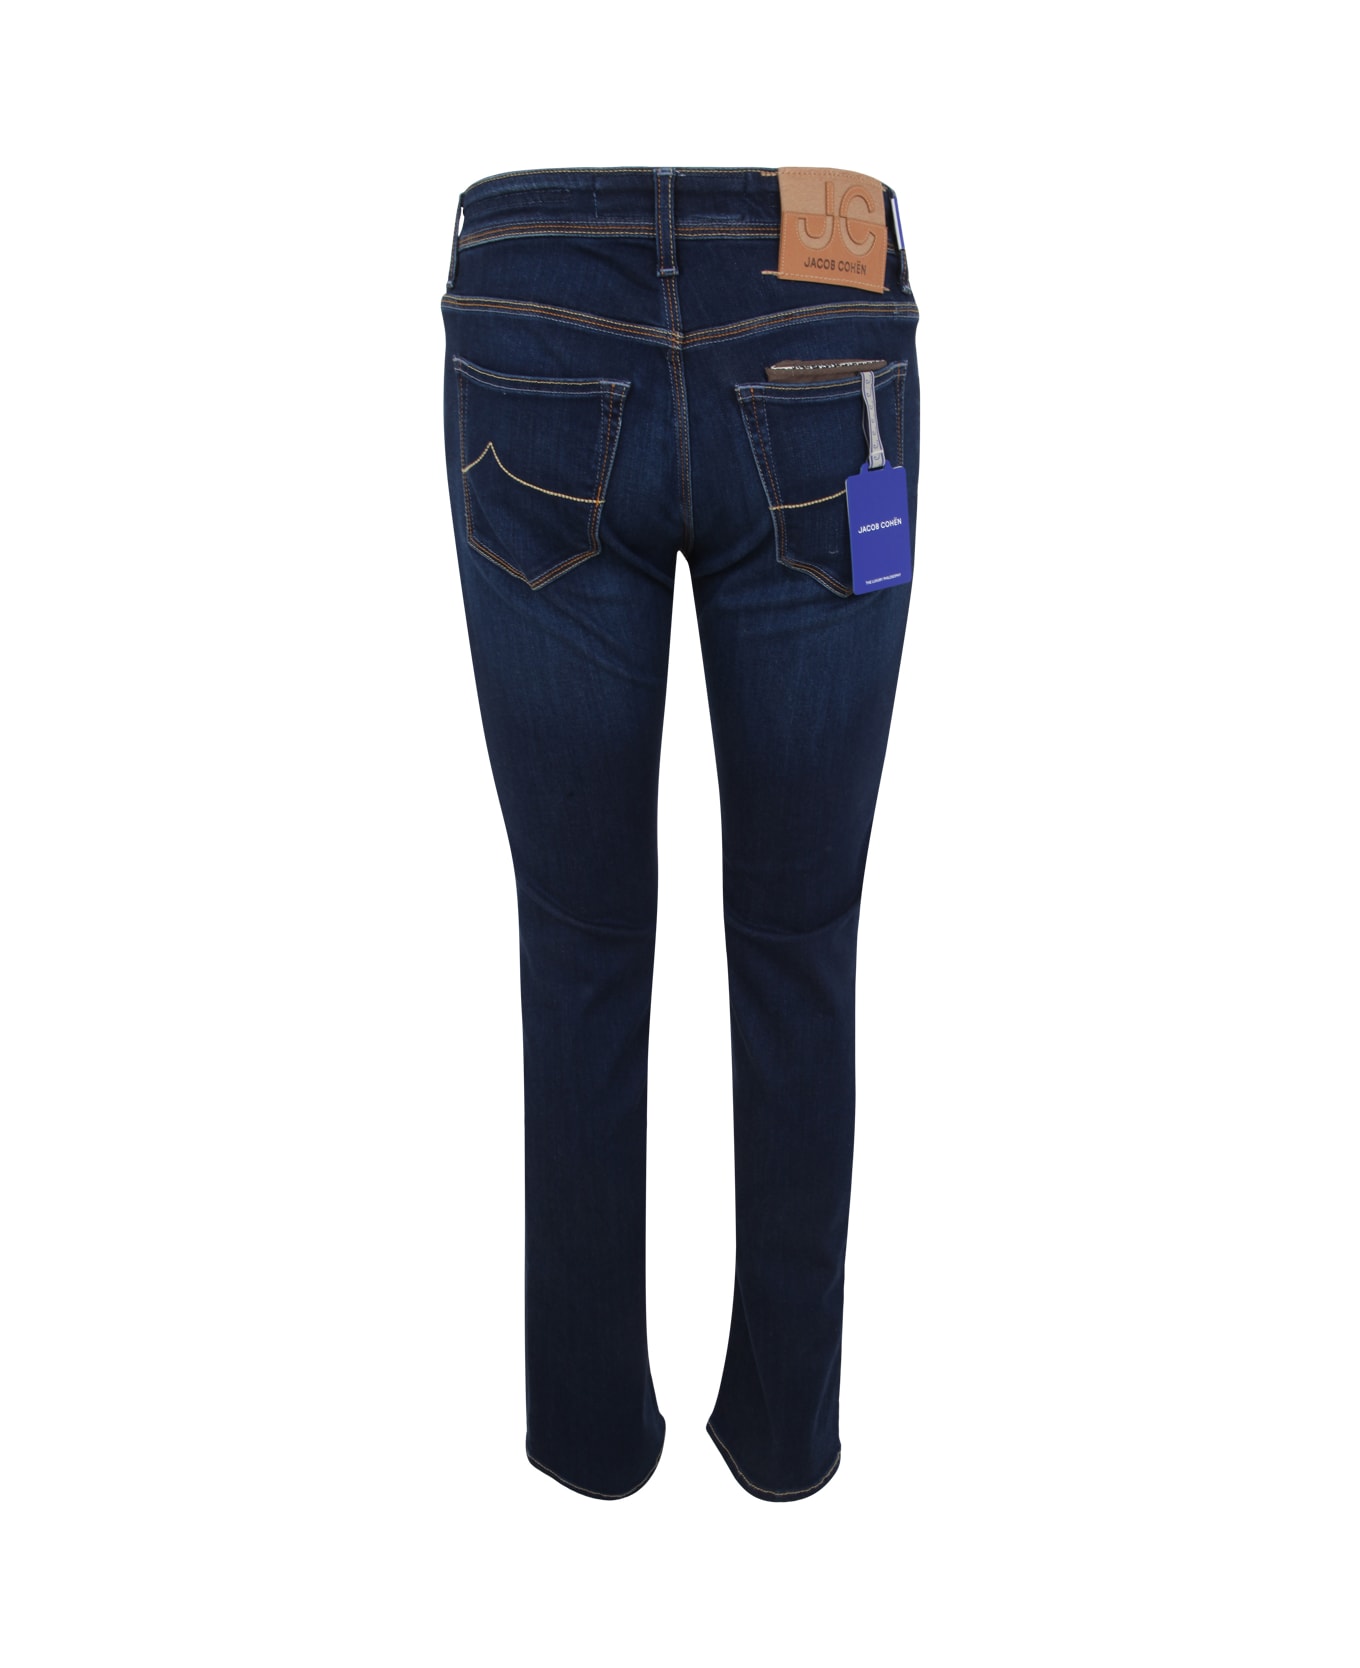 Jacob Cohen Bard Slim Fit Five Pocket Jeans - Denim